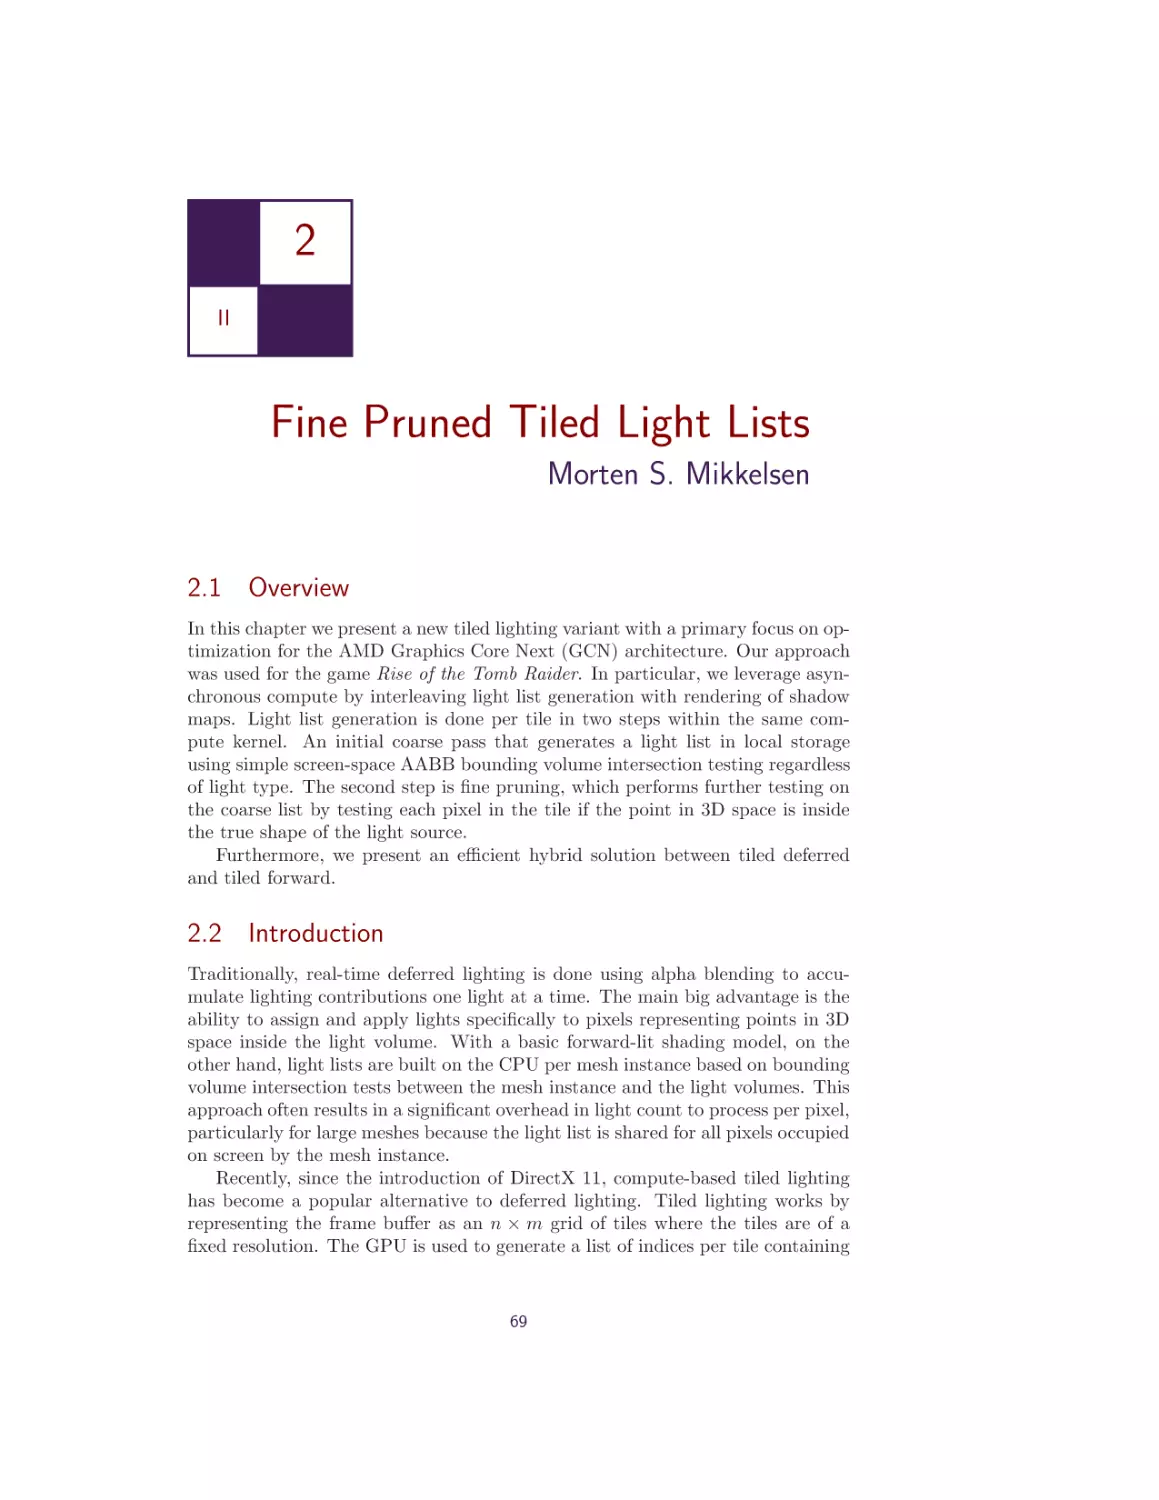 2. Fine Pruned Tiled Light Lists